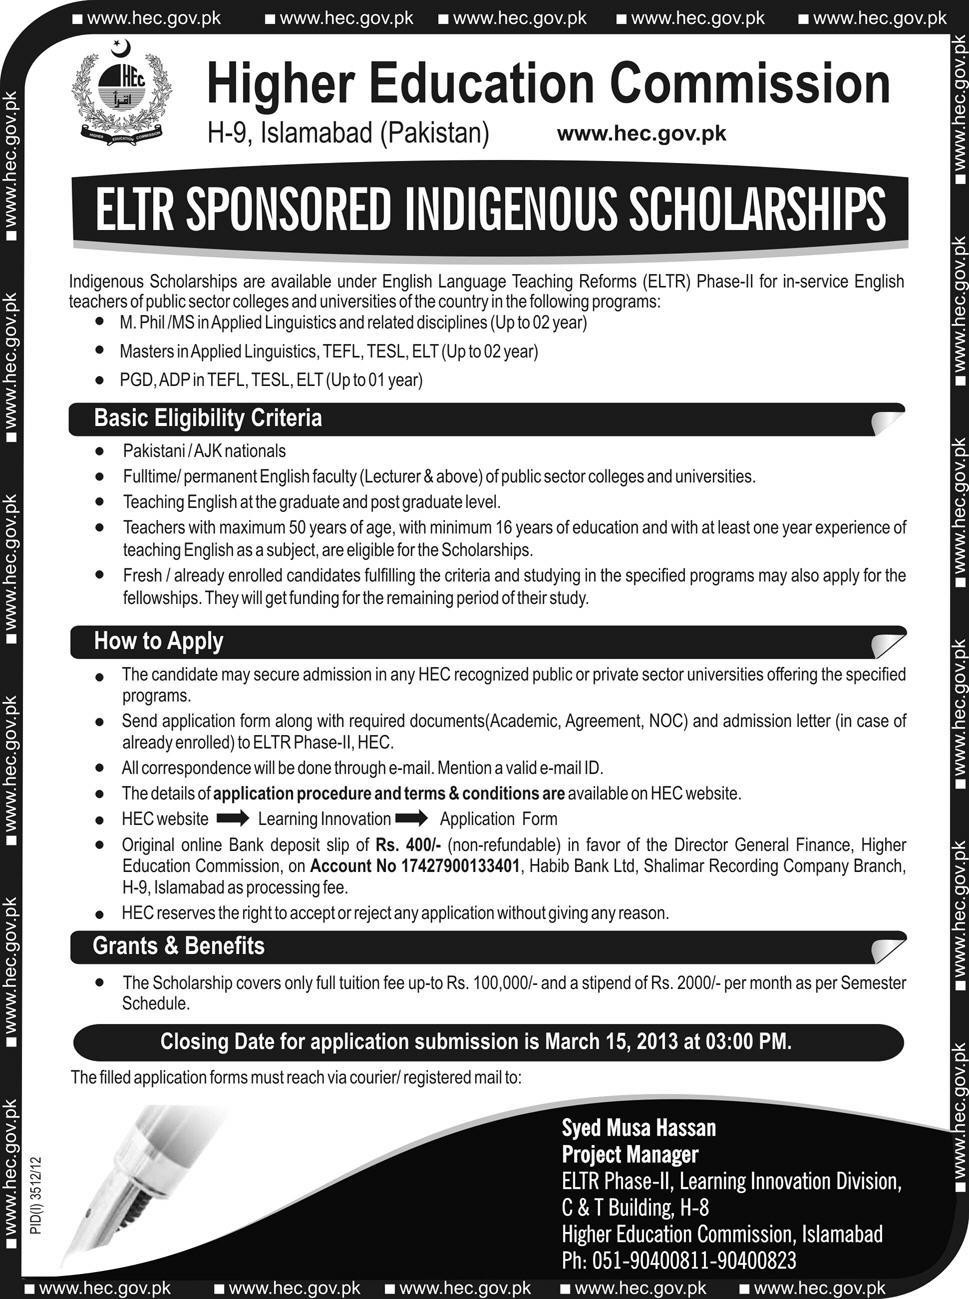 HEC ELTR Scholarships Application Form 2013